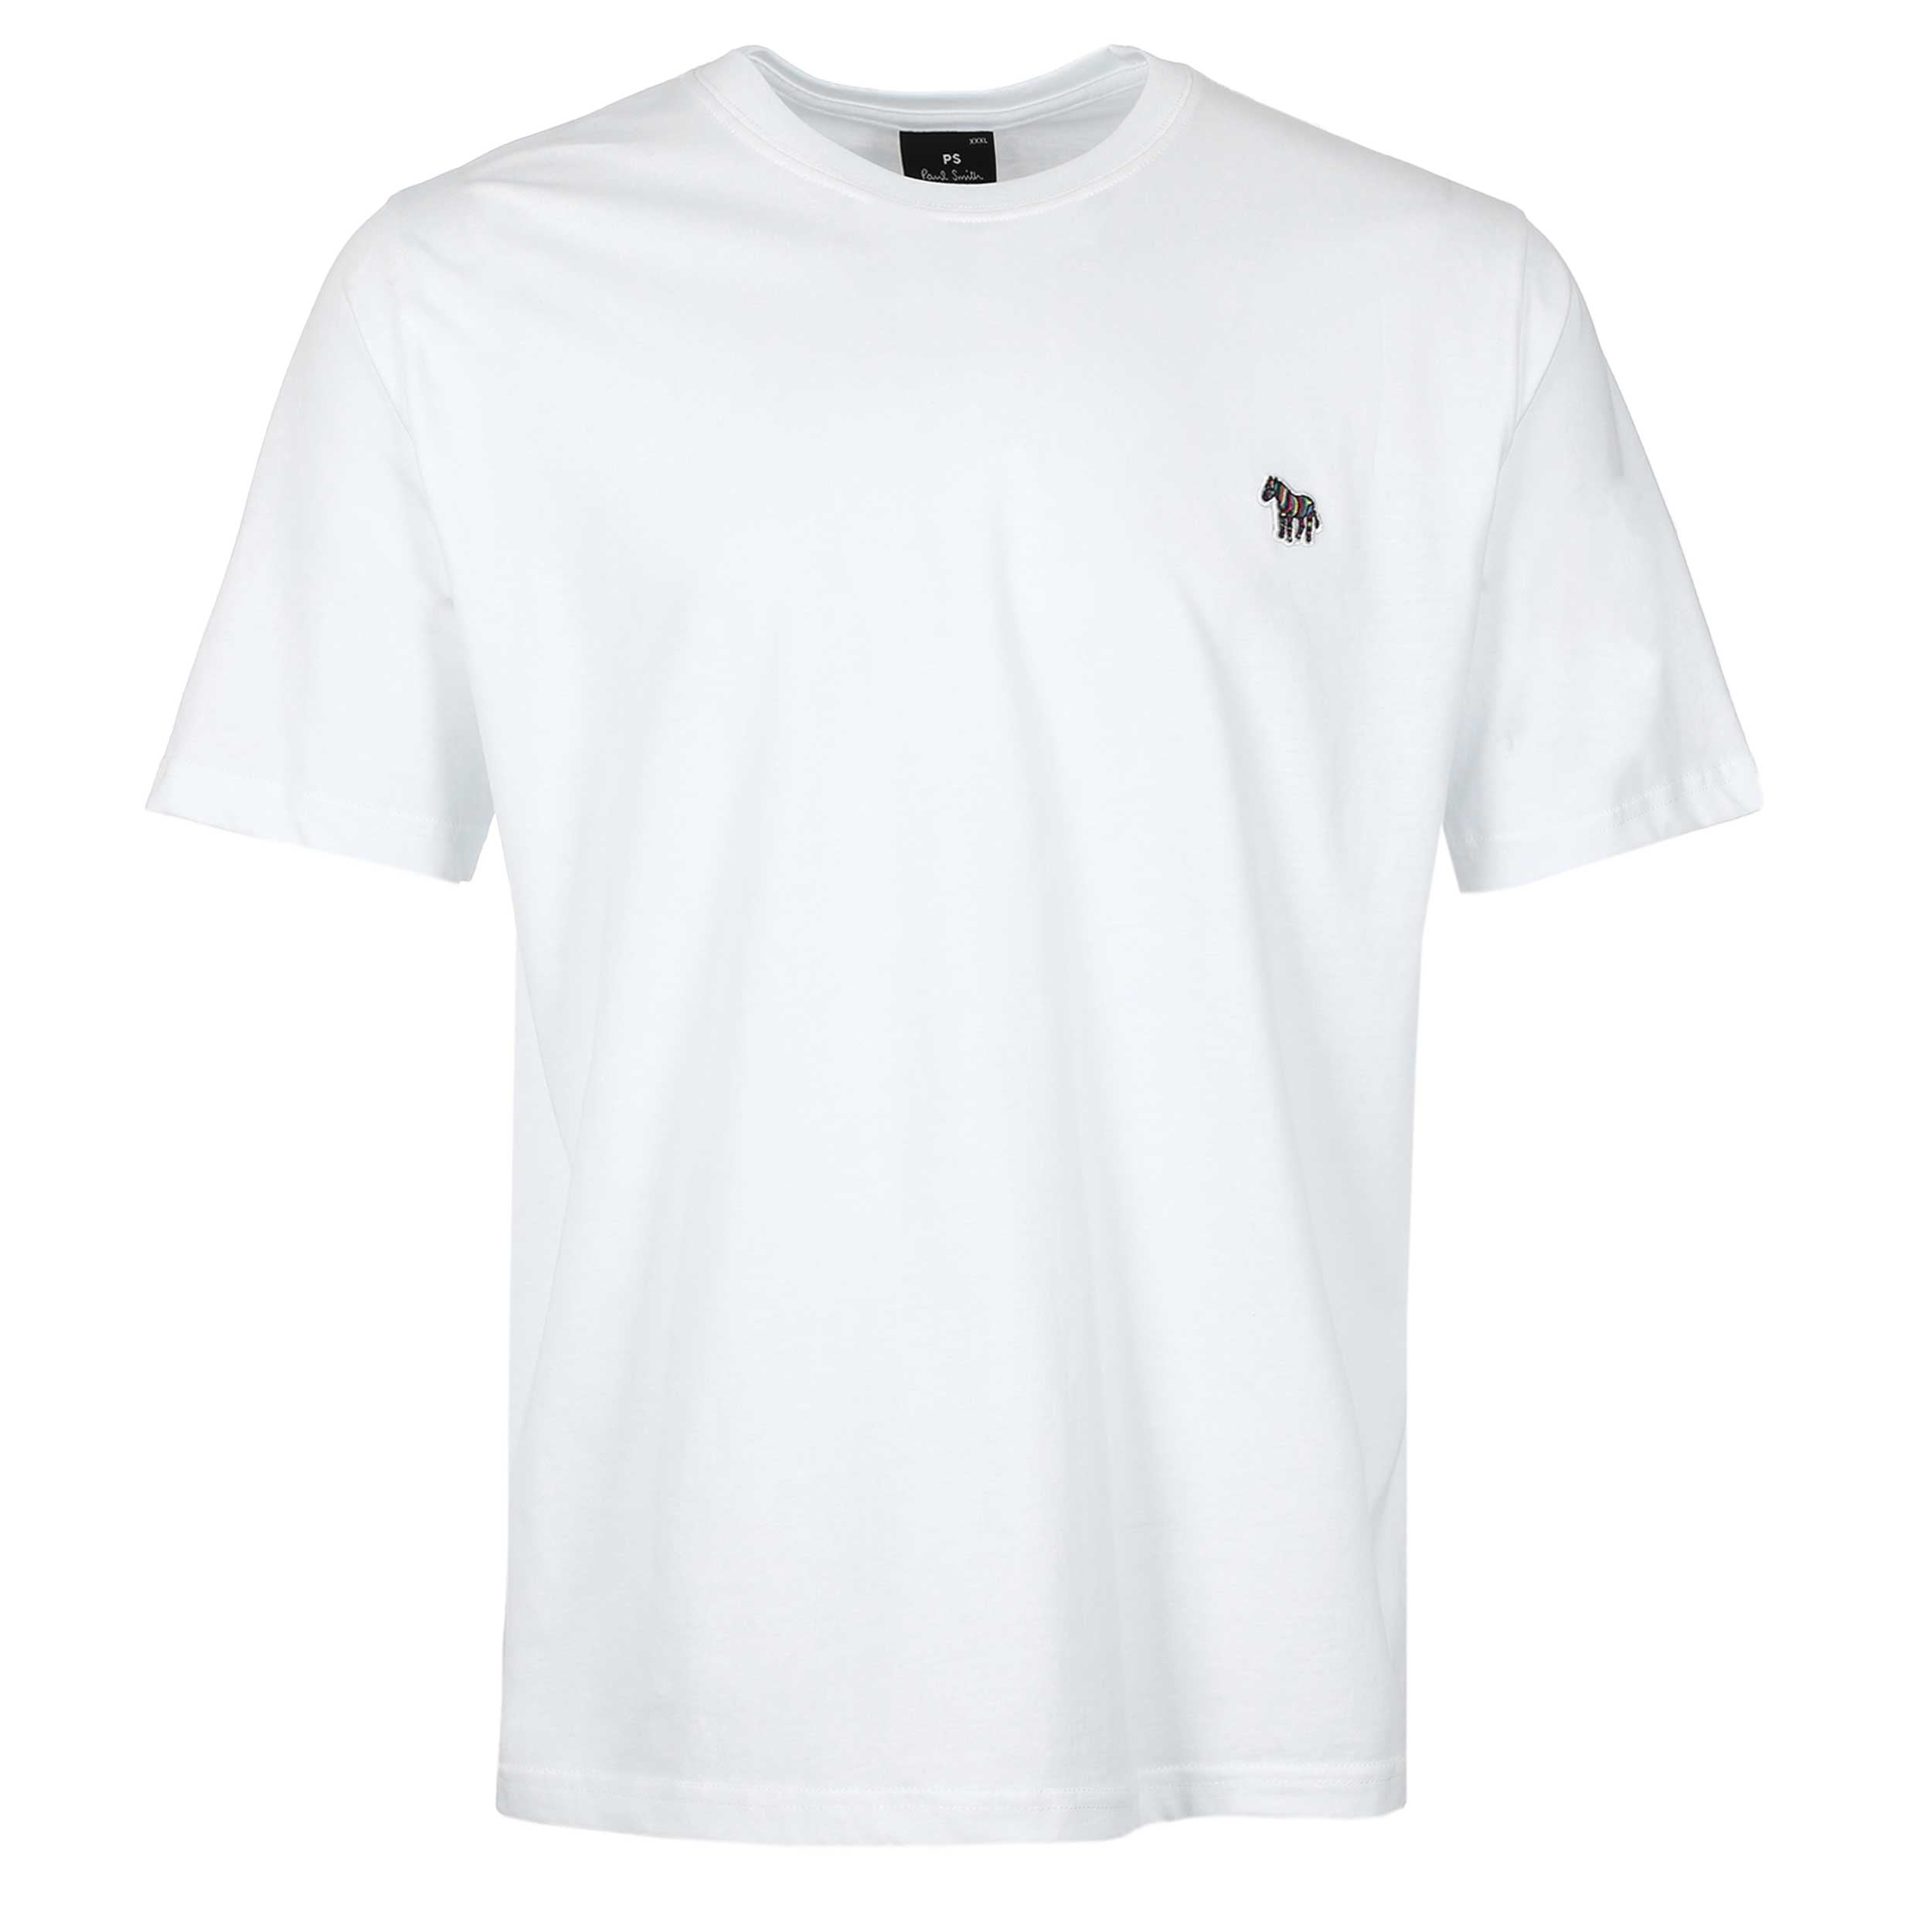 Paul Smith Reg Fit Zebra T Shirt in White